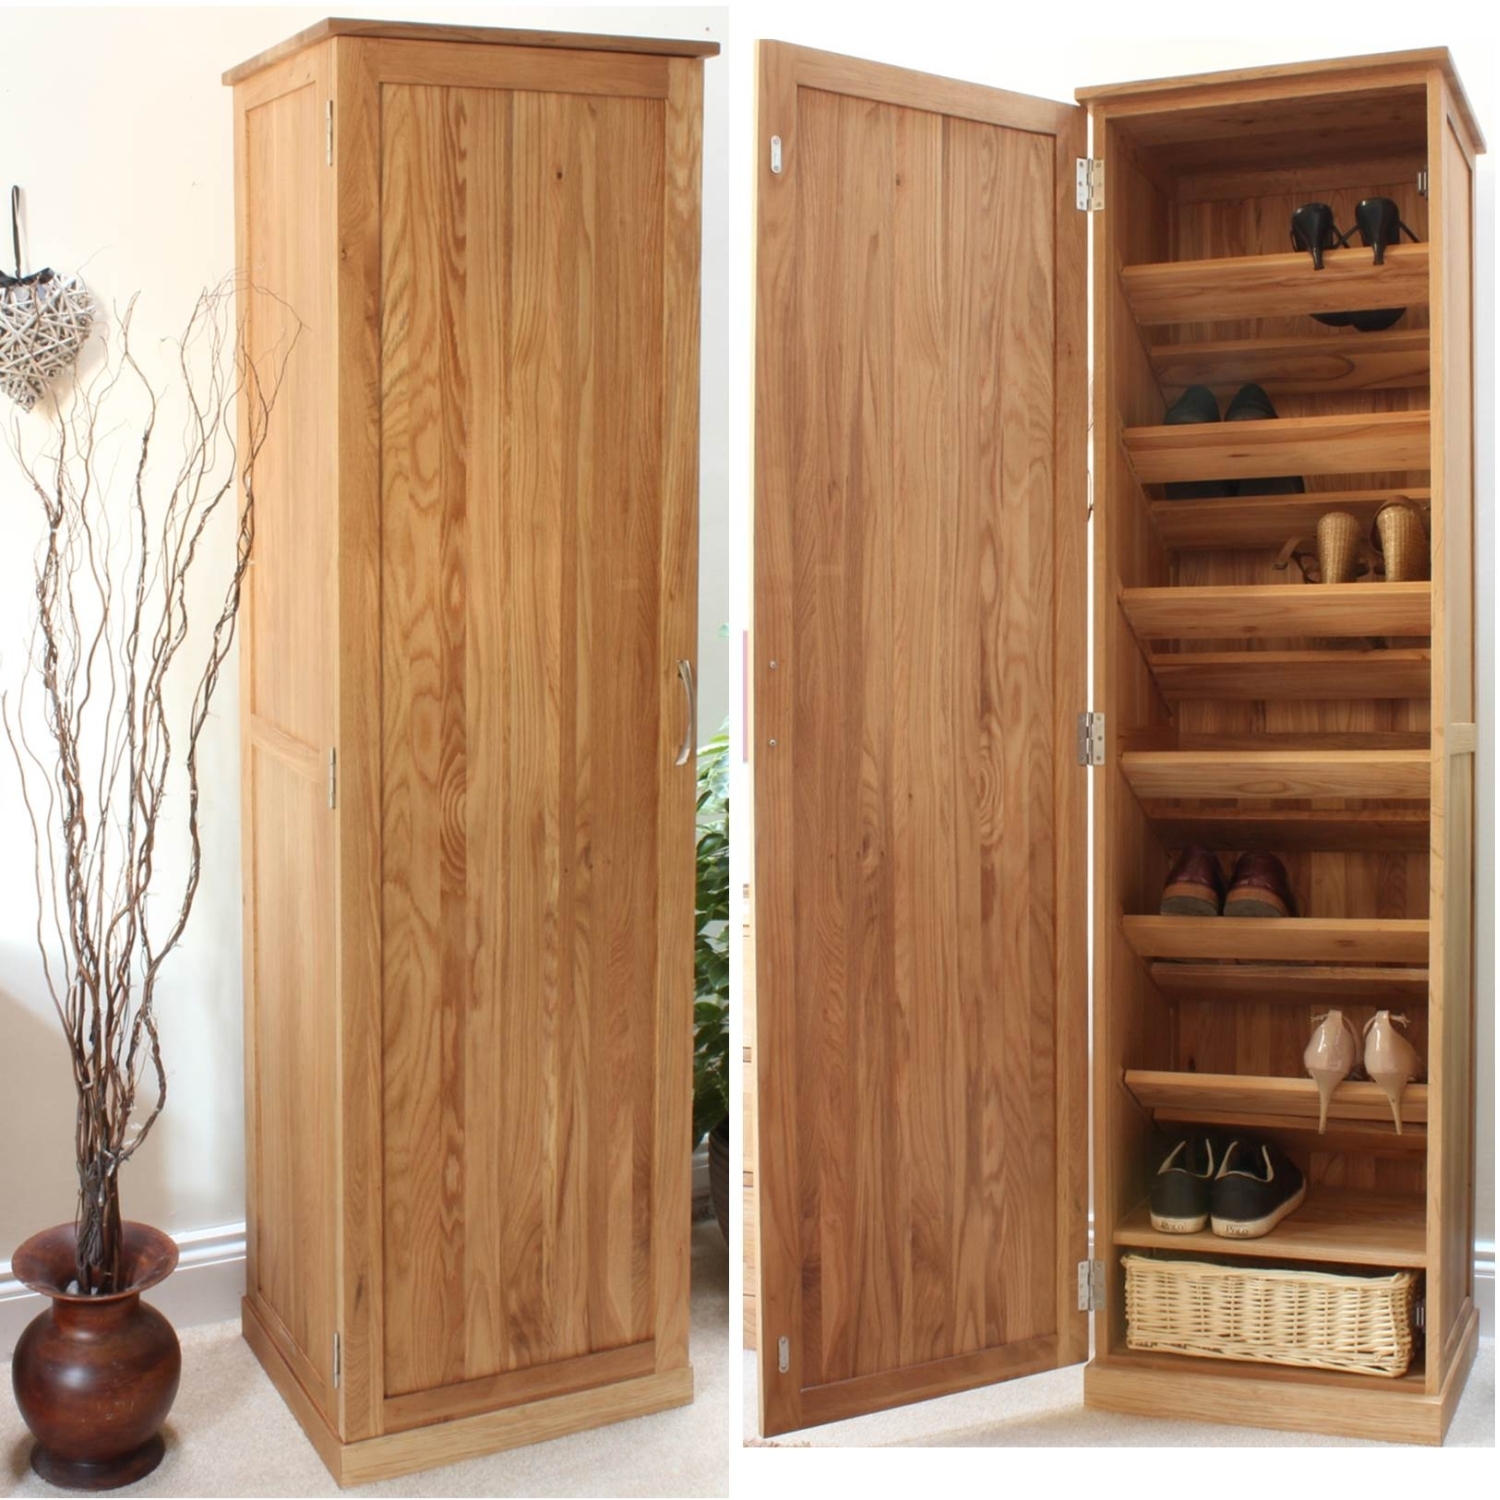 Storage Cabinets With Doors Visualhunt, Thin Storage Shelves